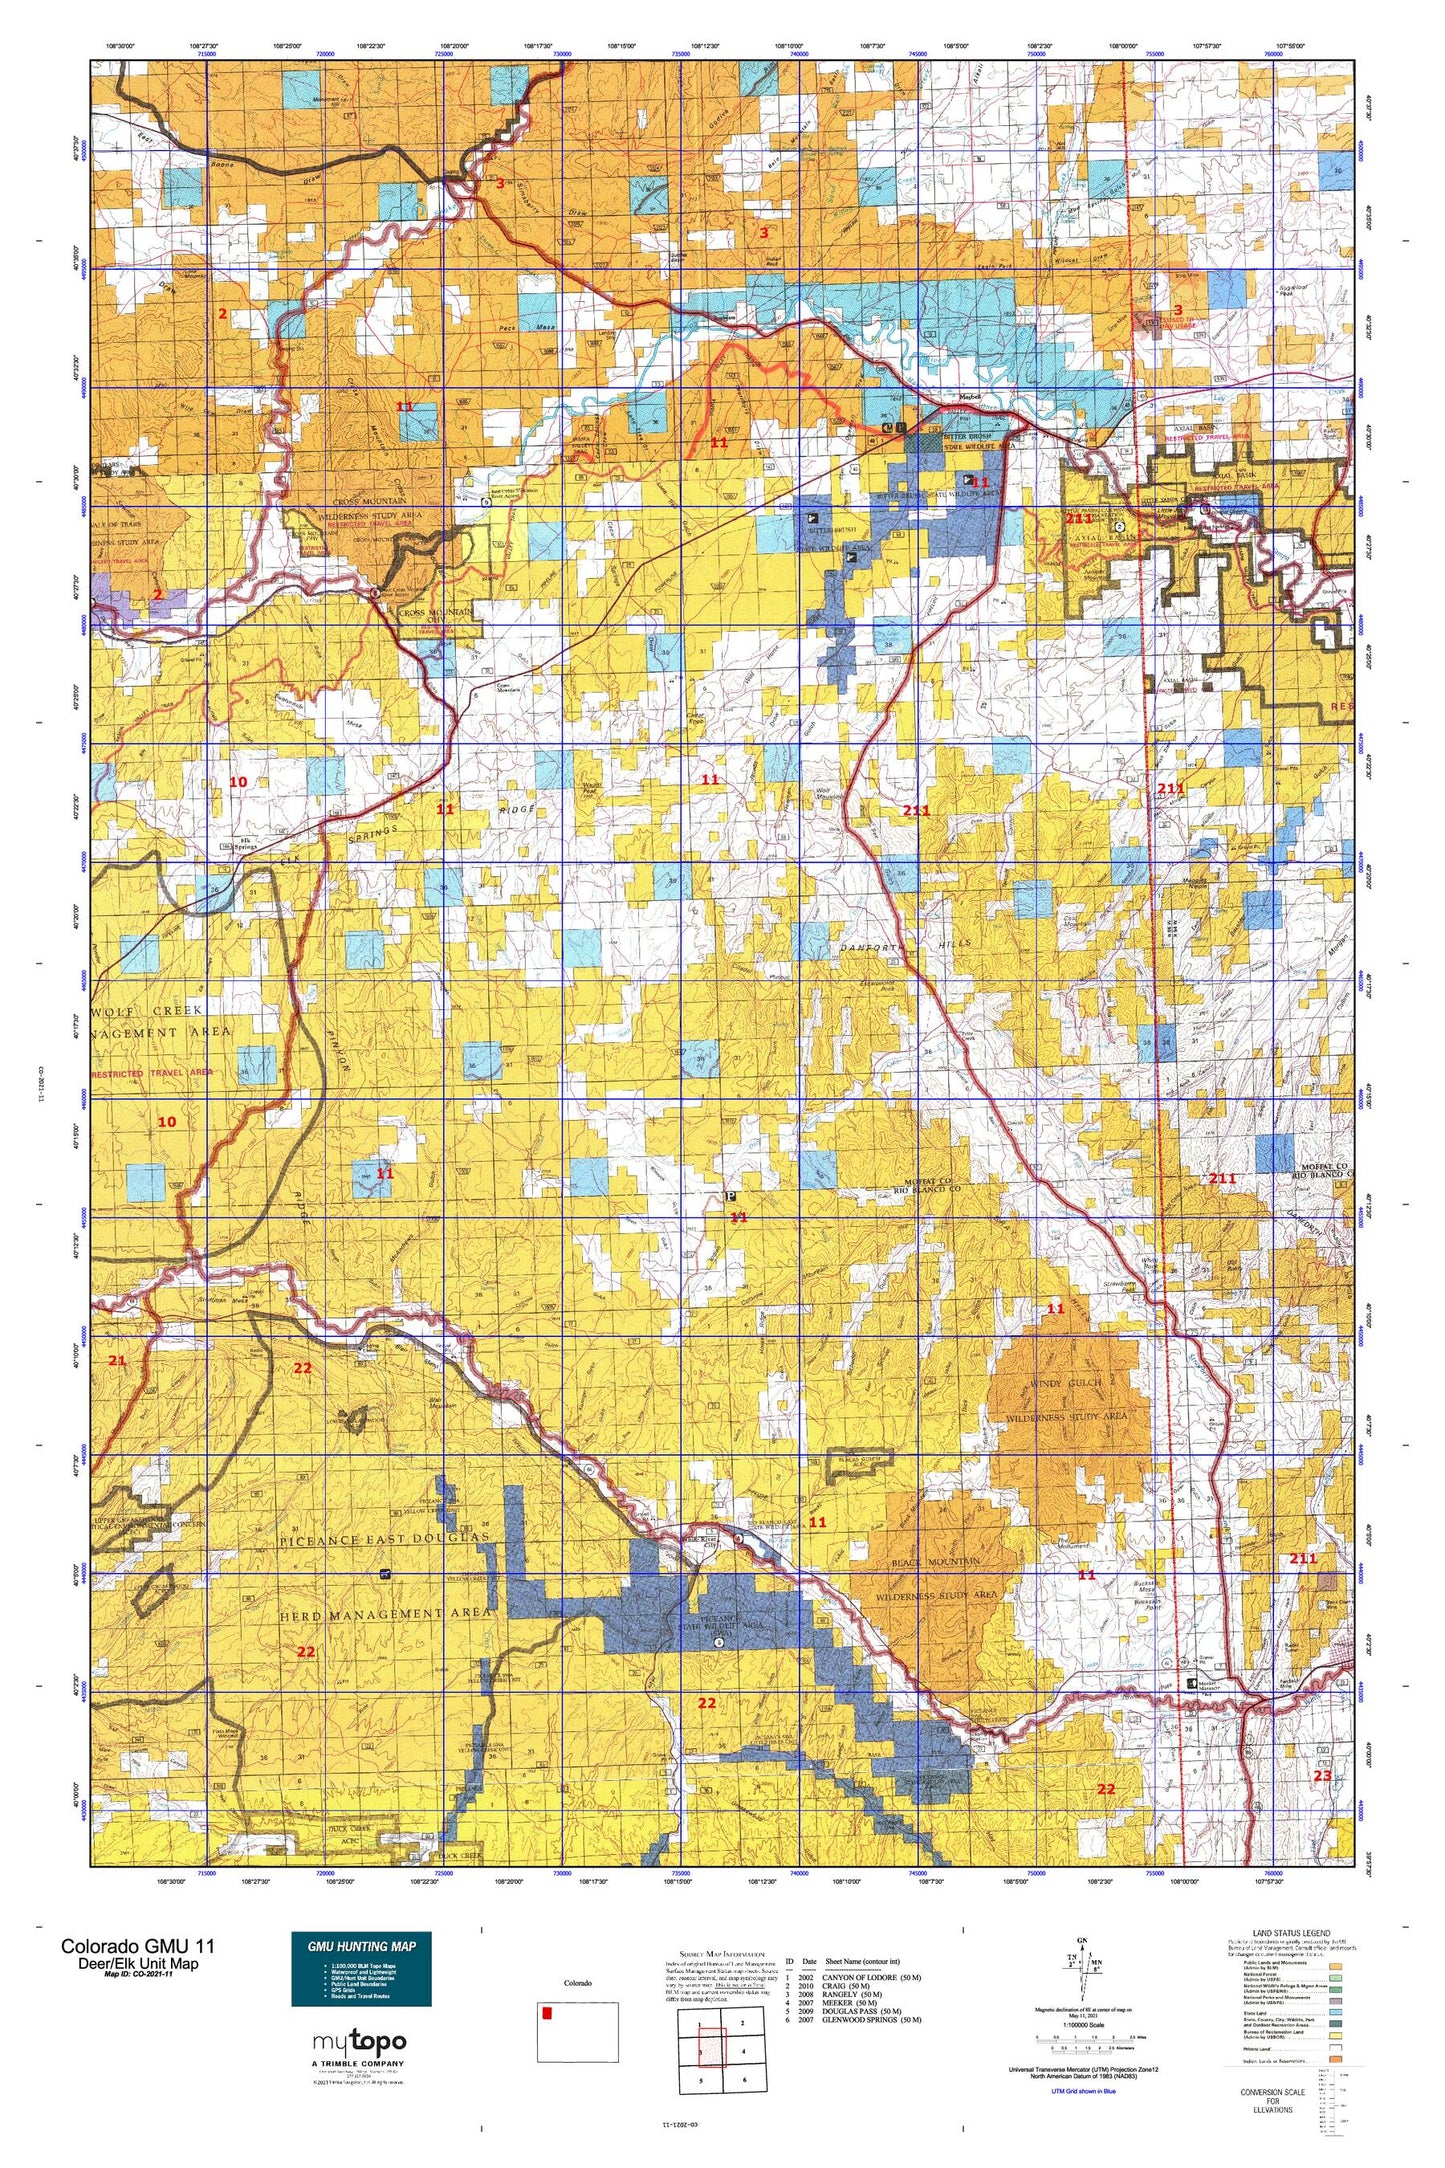 Colorado GMU 11 Map Image